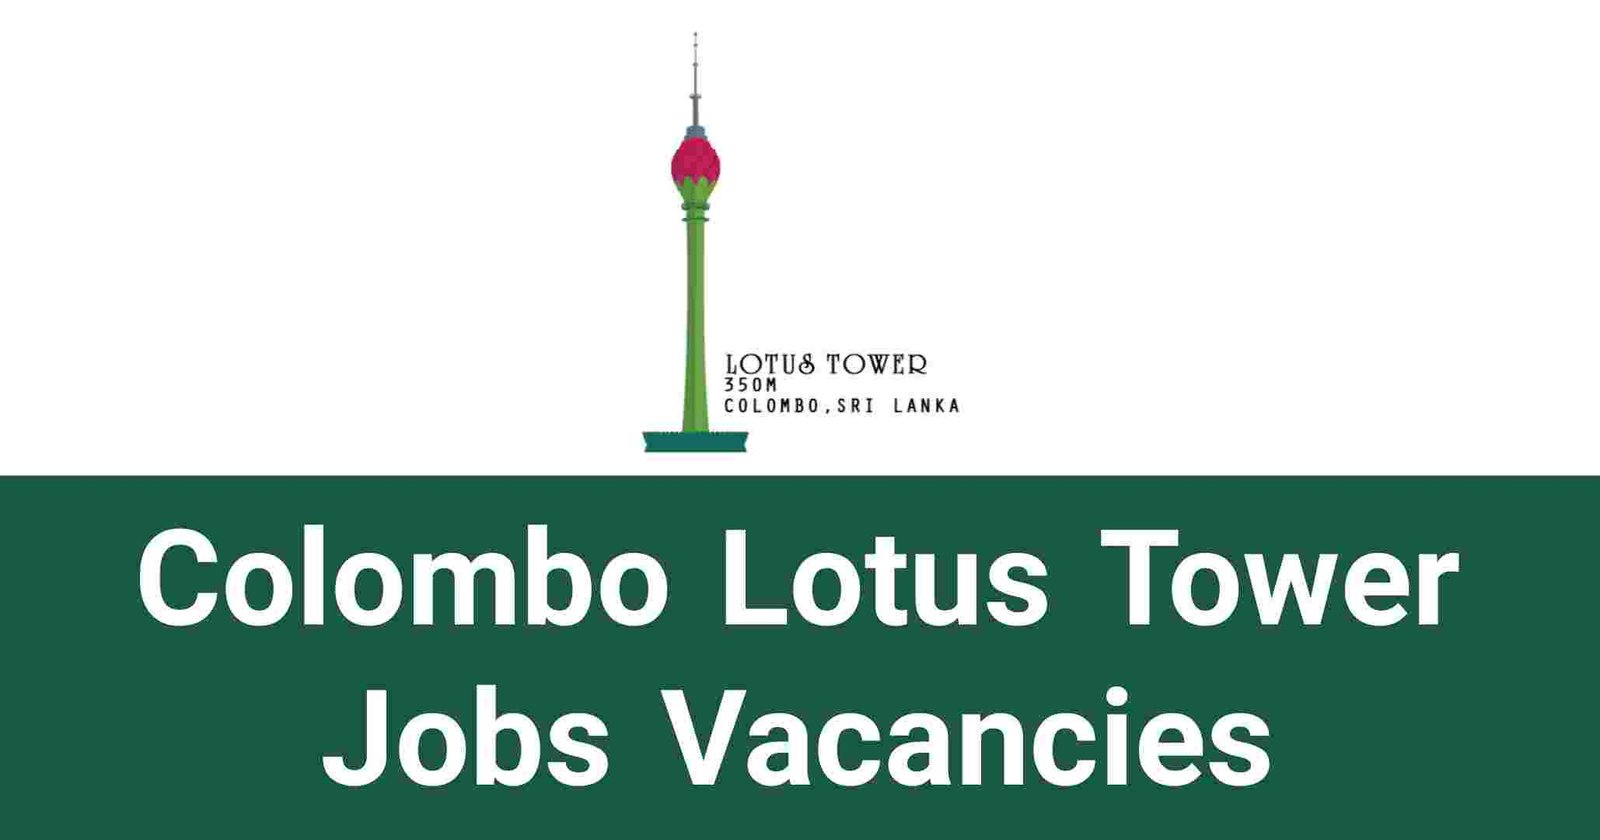 Colombo Lotus Tower Jobs Vacancies